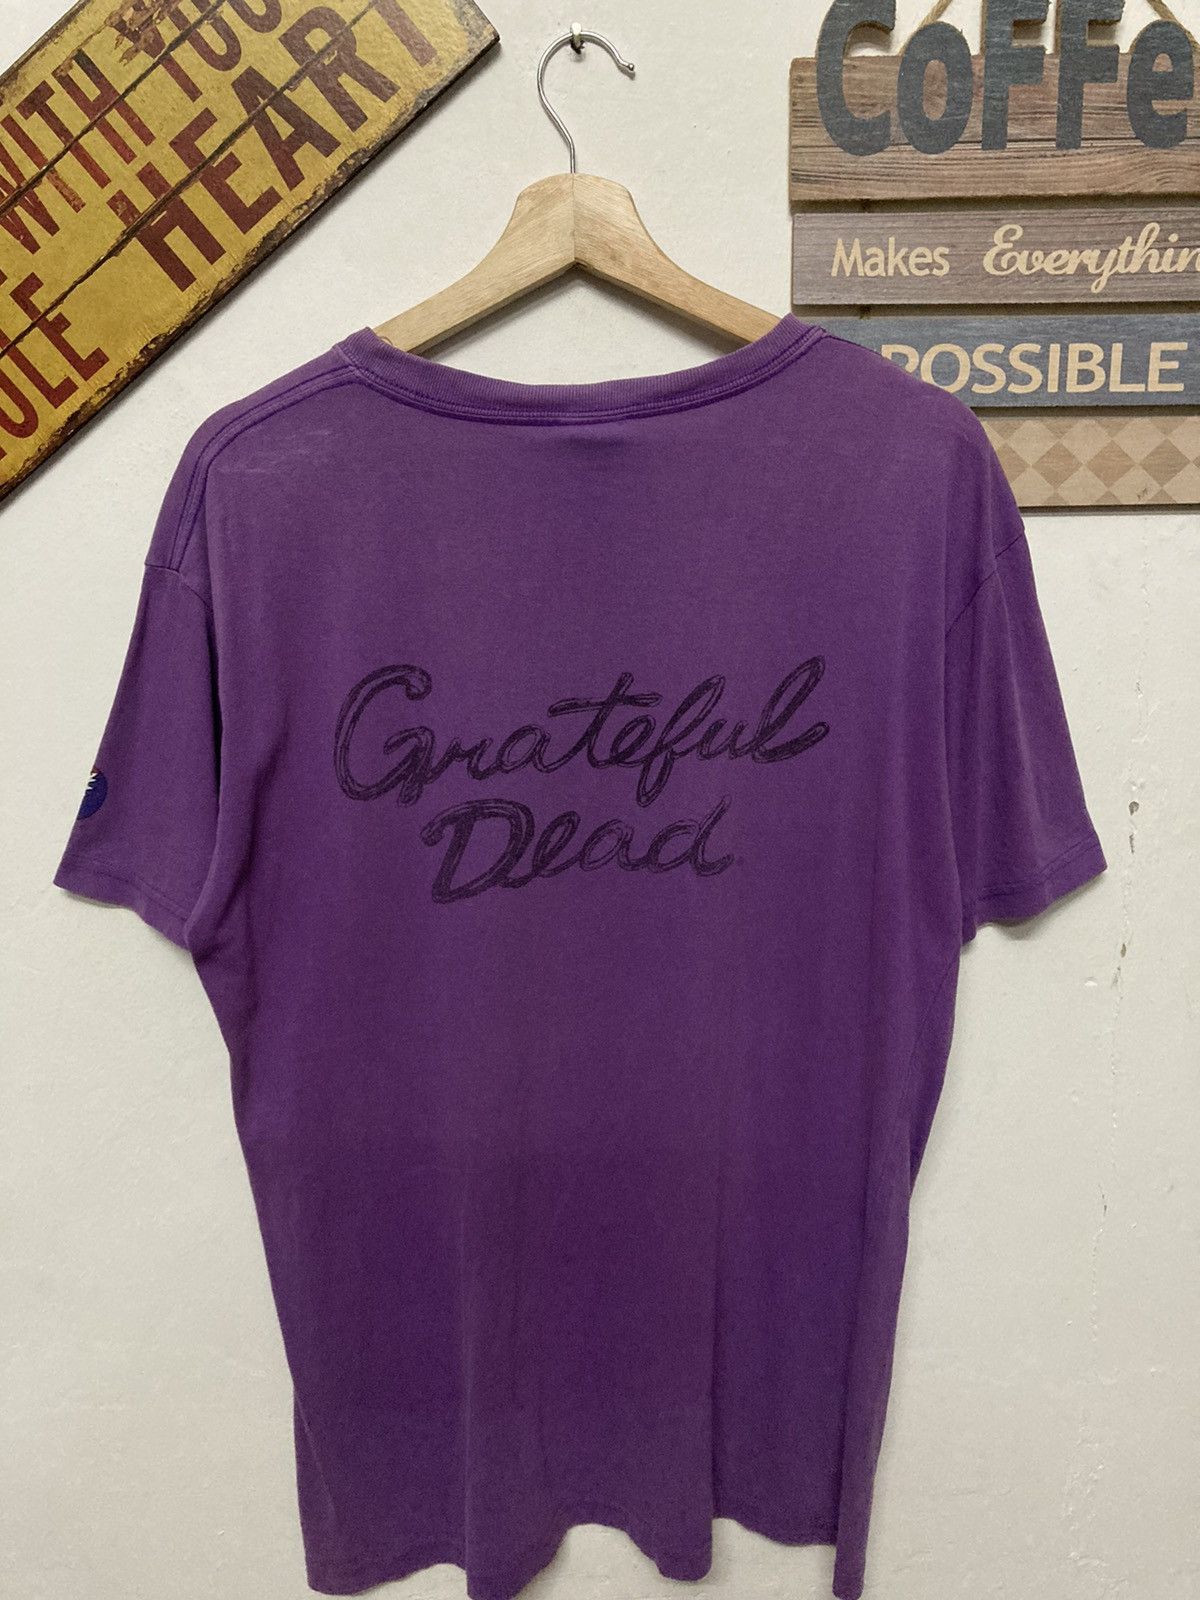 Vintage Grateful Dead 2005 T shirt - 2